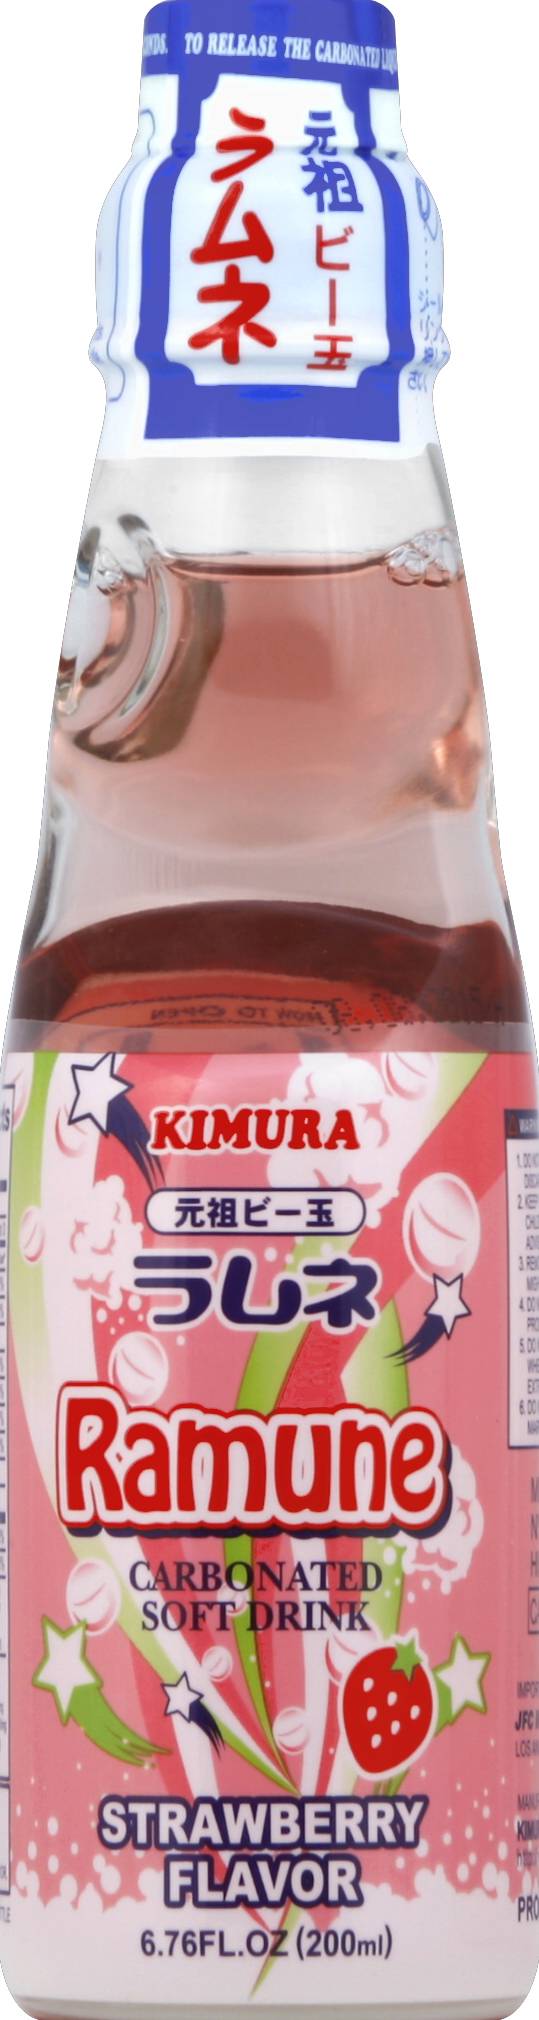 Kimura Soft Drink (6.76 fl oz)